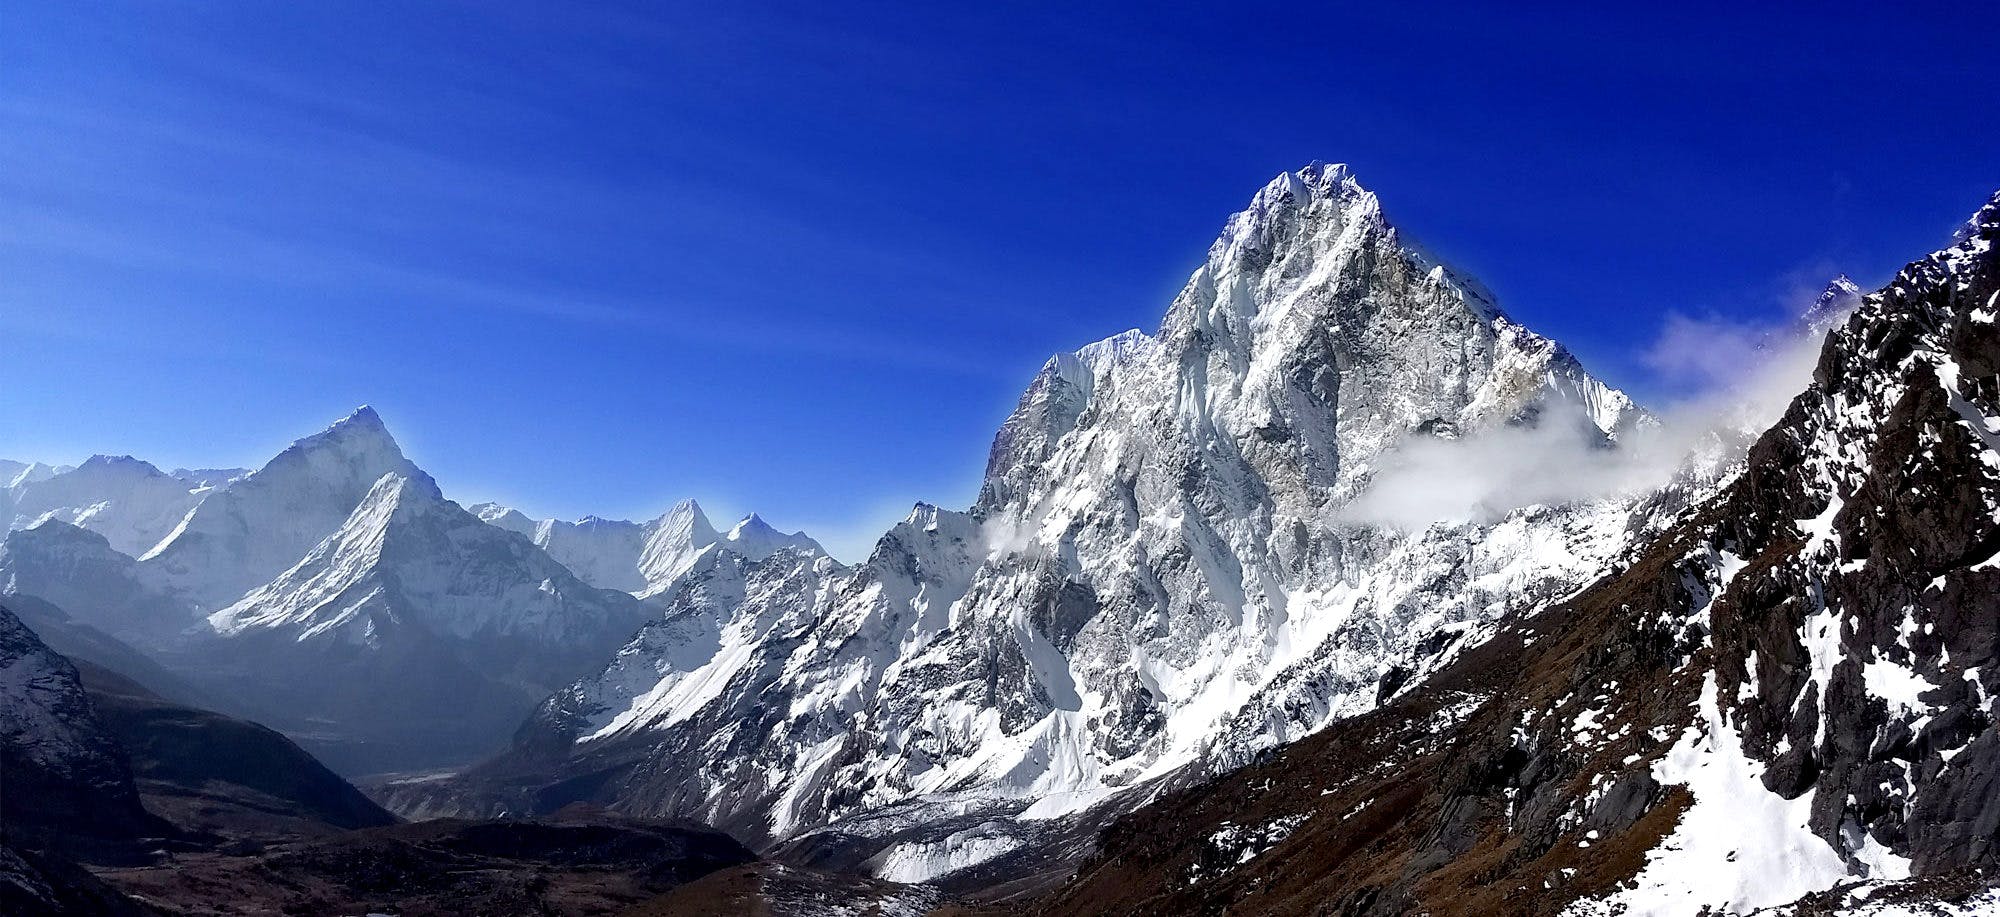 Trekking Nepal's Great Himalaya Trails